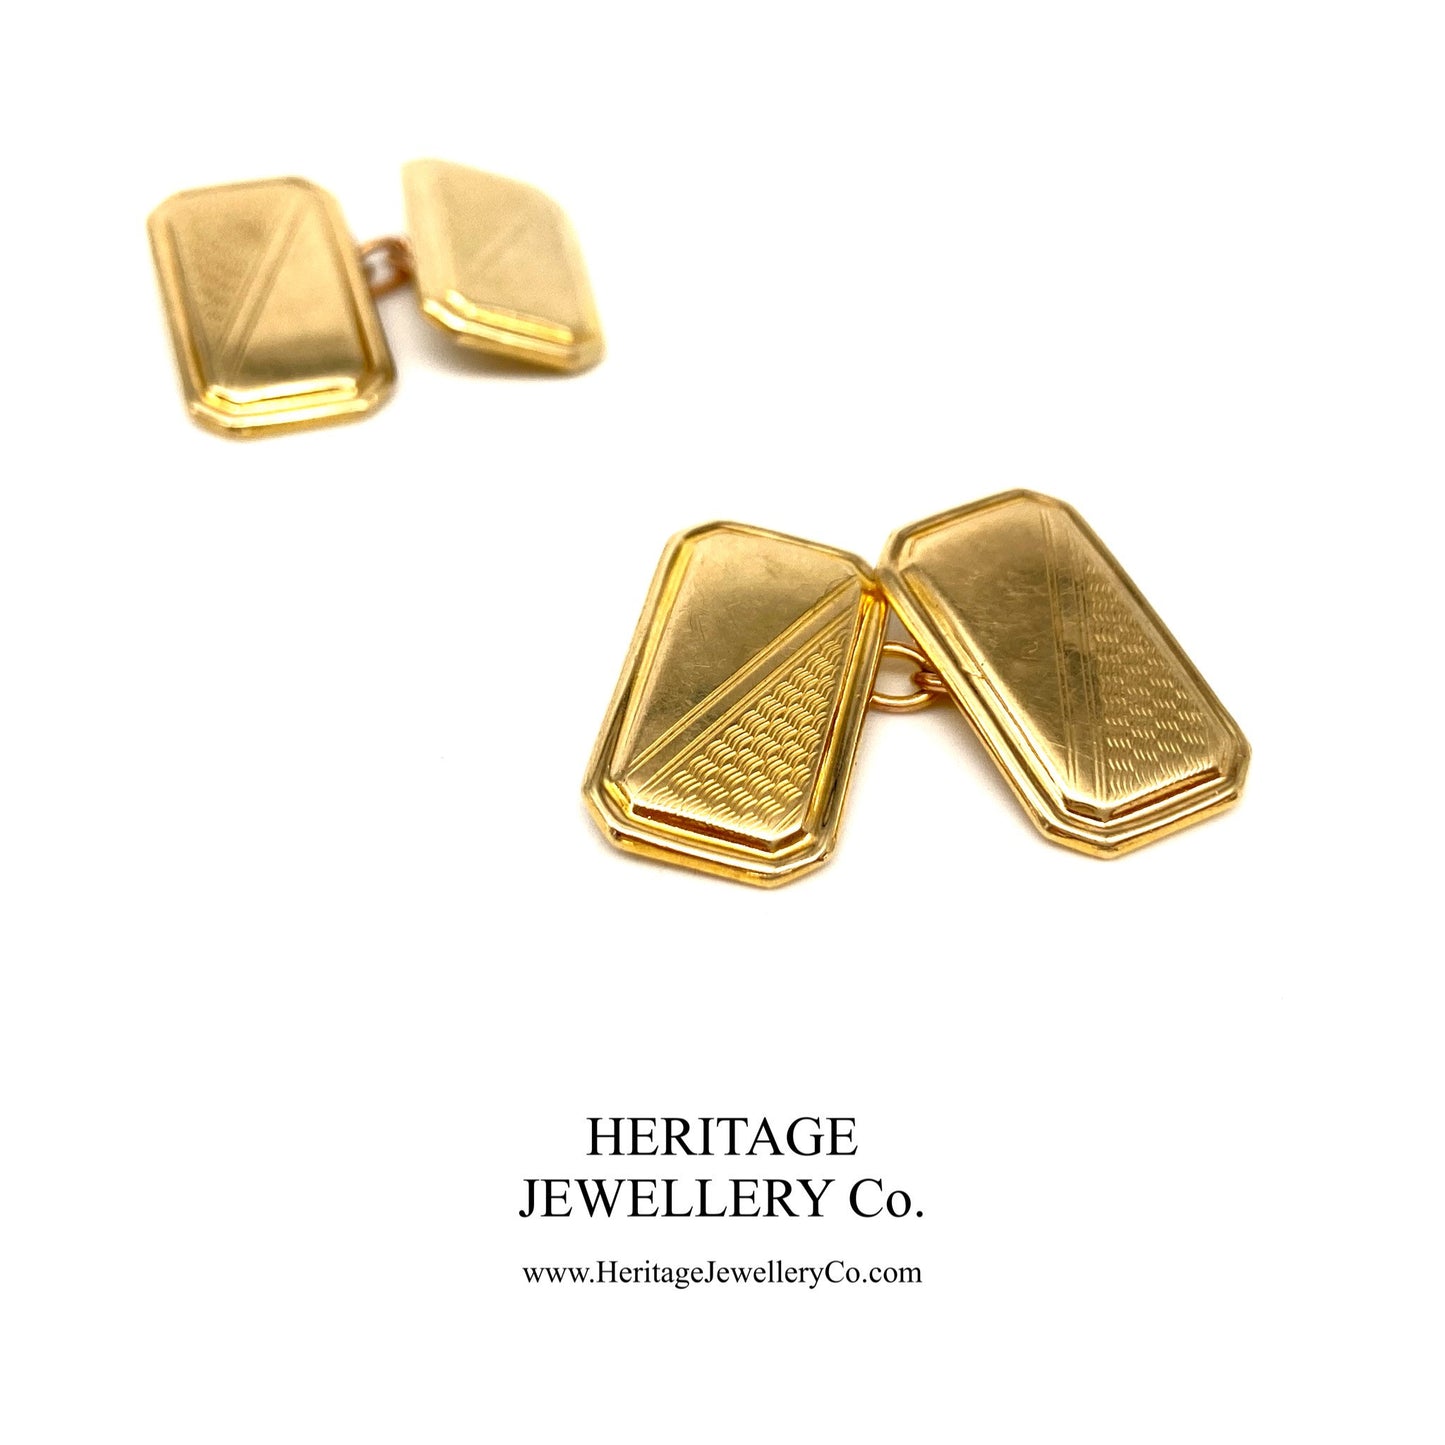 Antique Art Deco Gold Cufflinks with Antique Box